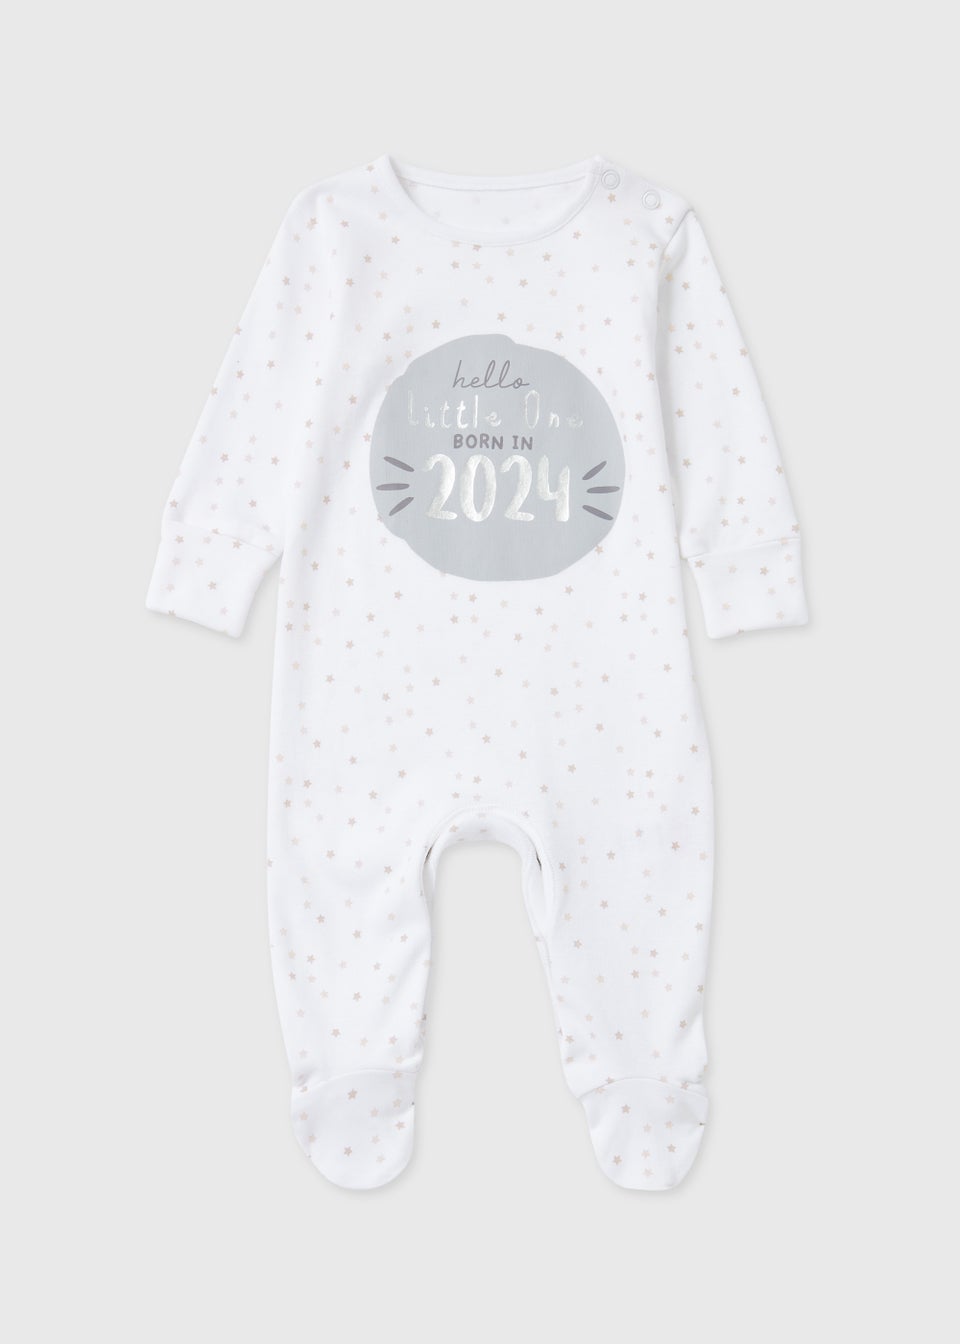 Baby Grey Born in 2024 Print Sleepsuit (Tiny Baby-6mths)